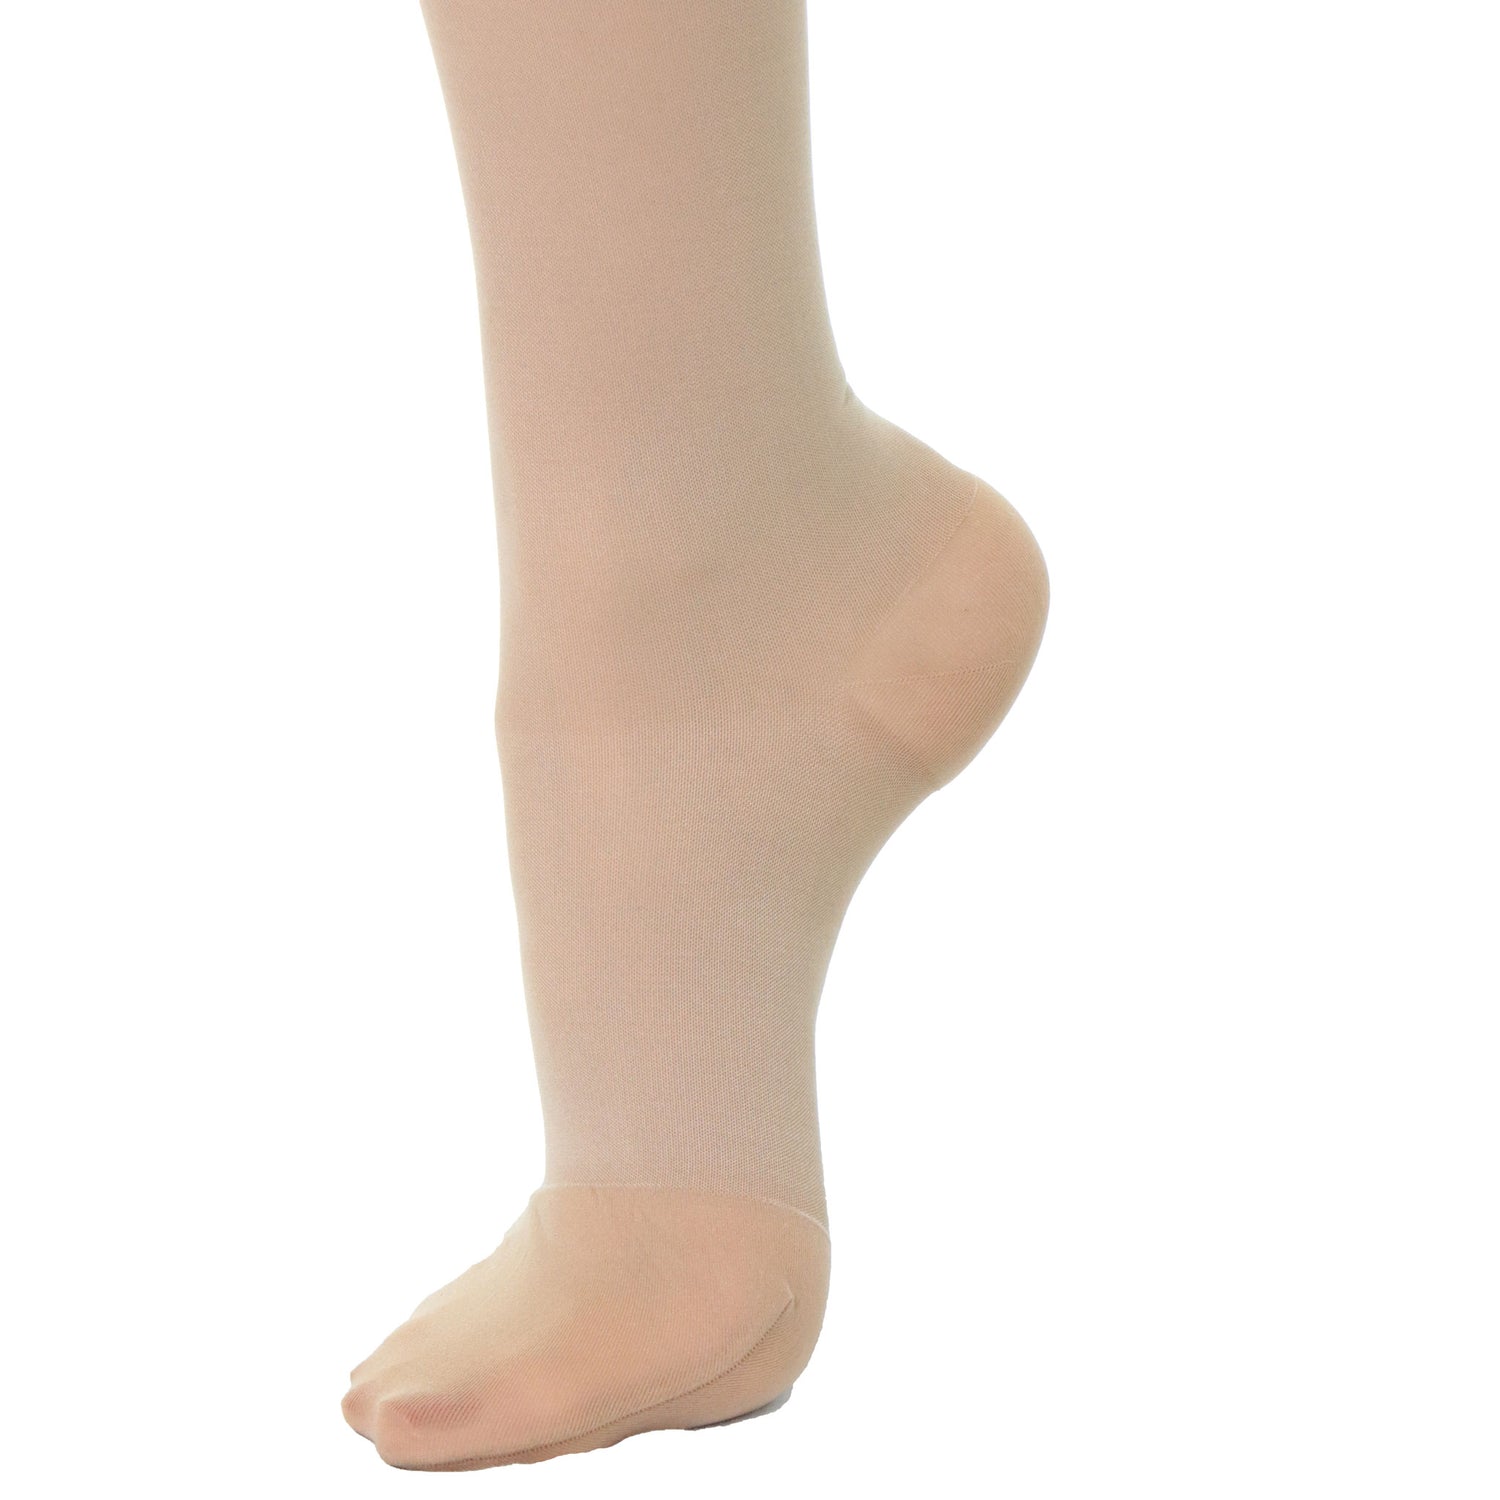 Doctor Brace women compression socks knee high 30-40 mmHg beige closed toe foot view